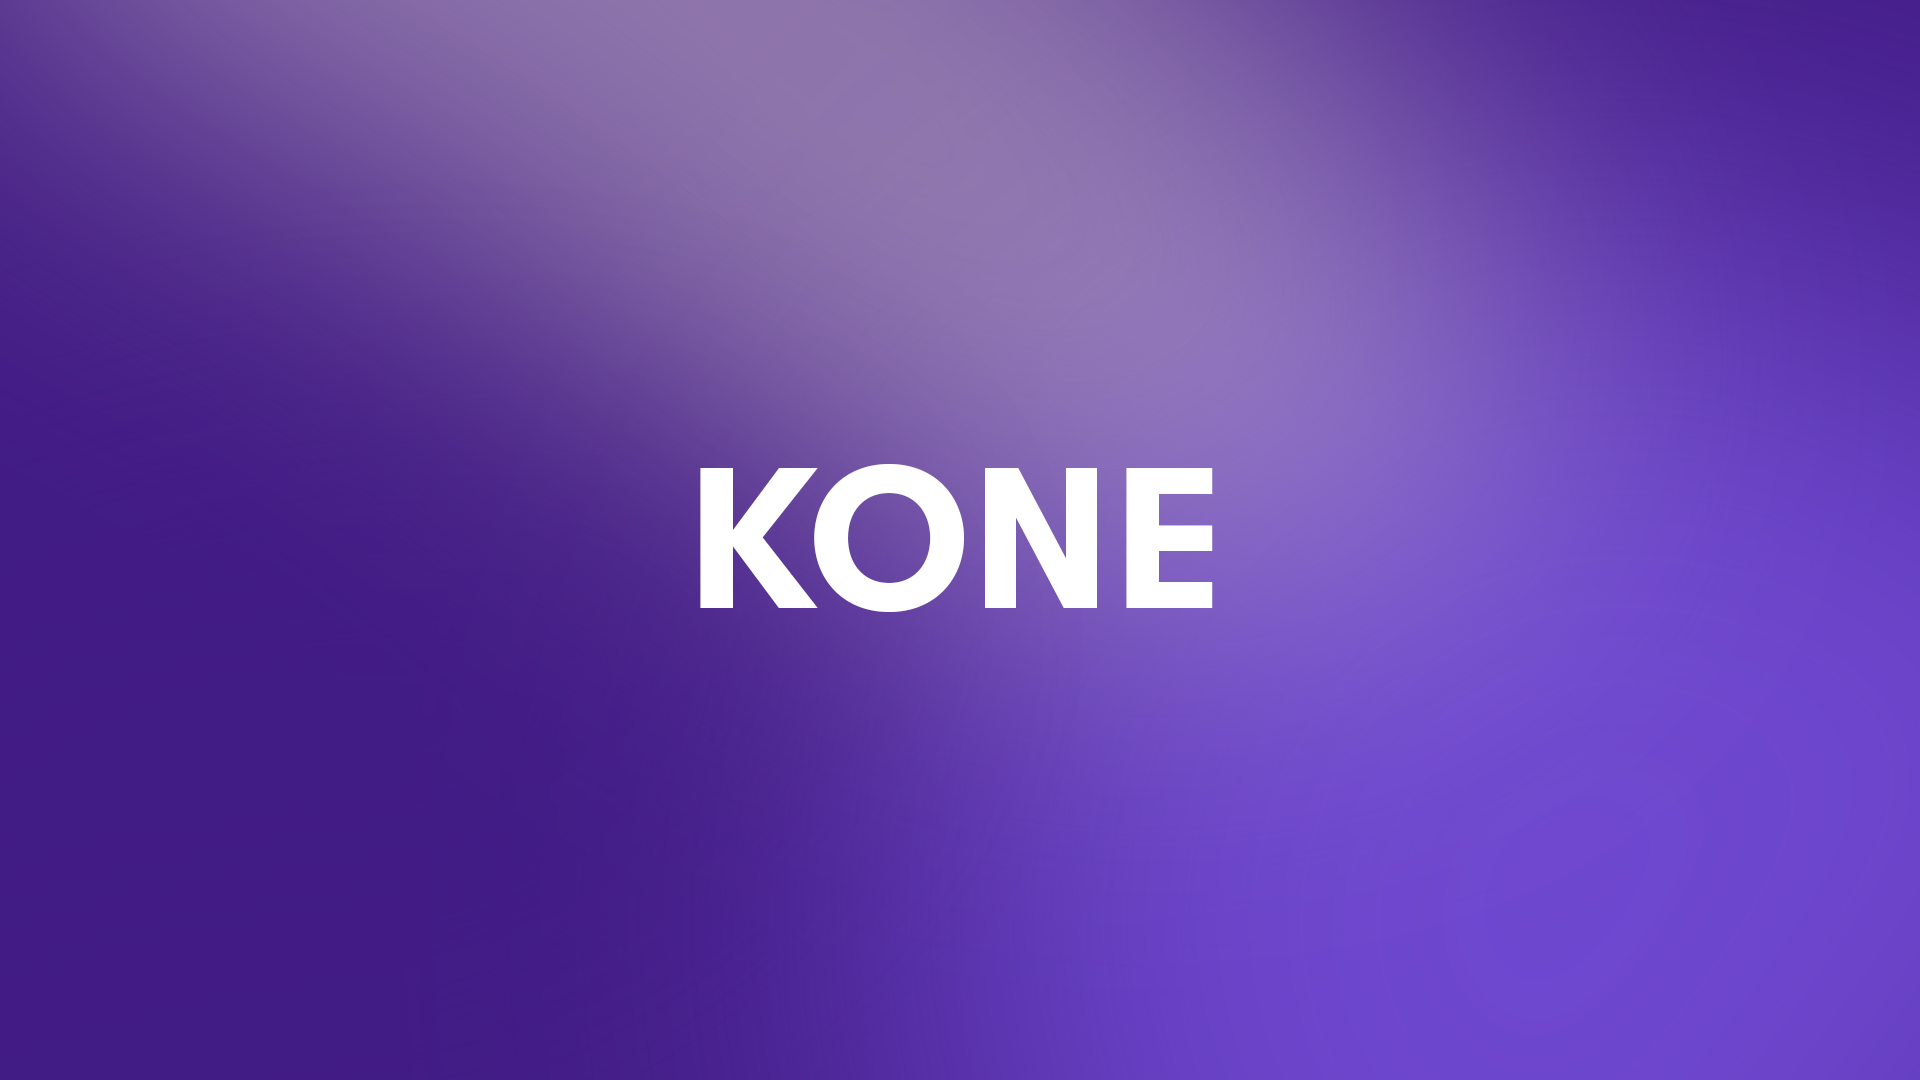 Kone Text V2 Case Stories Featured Image Medium 